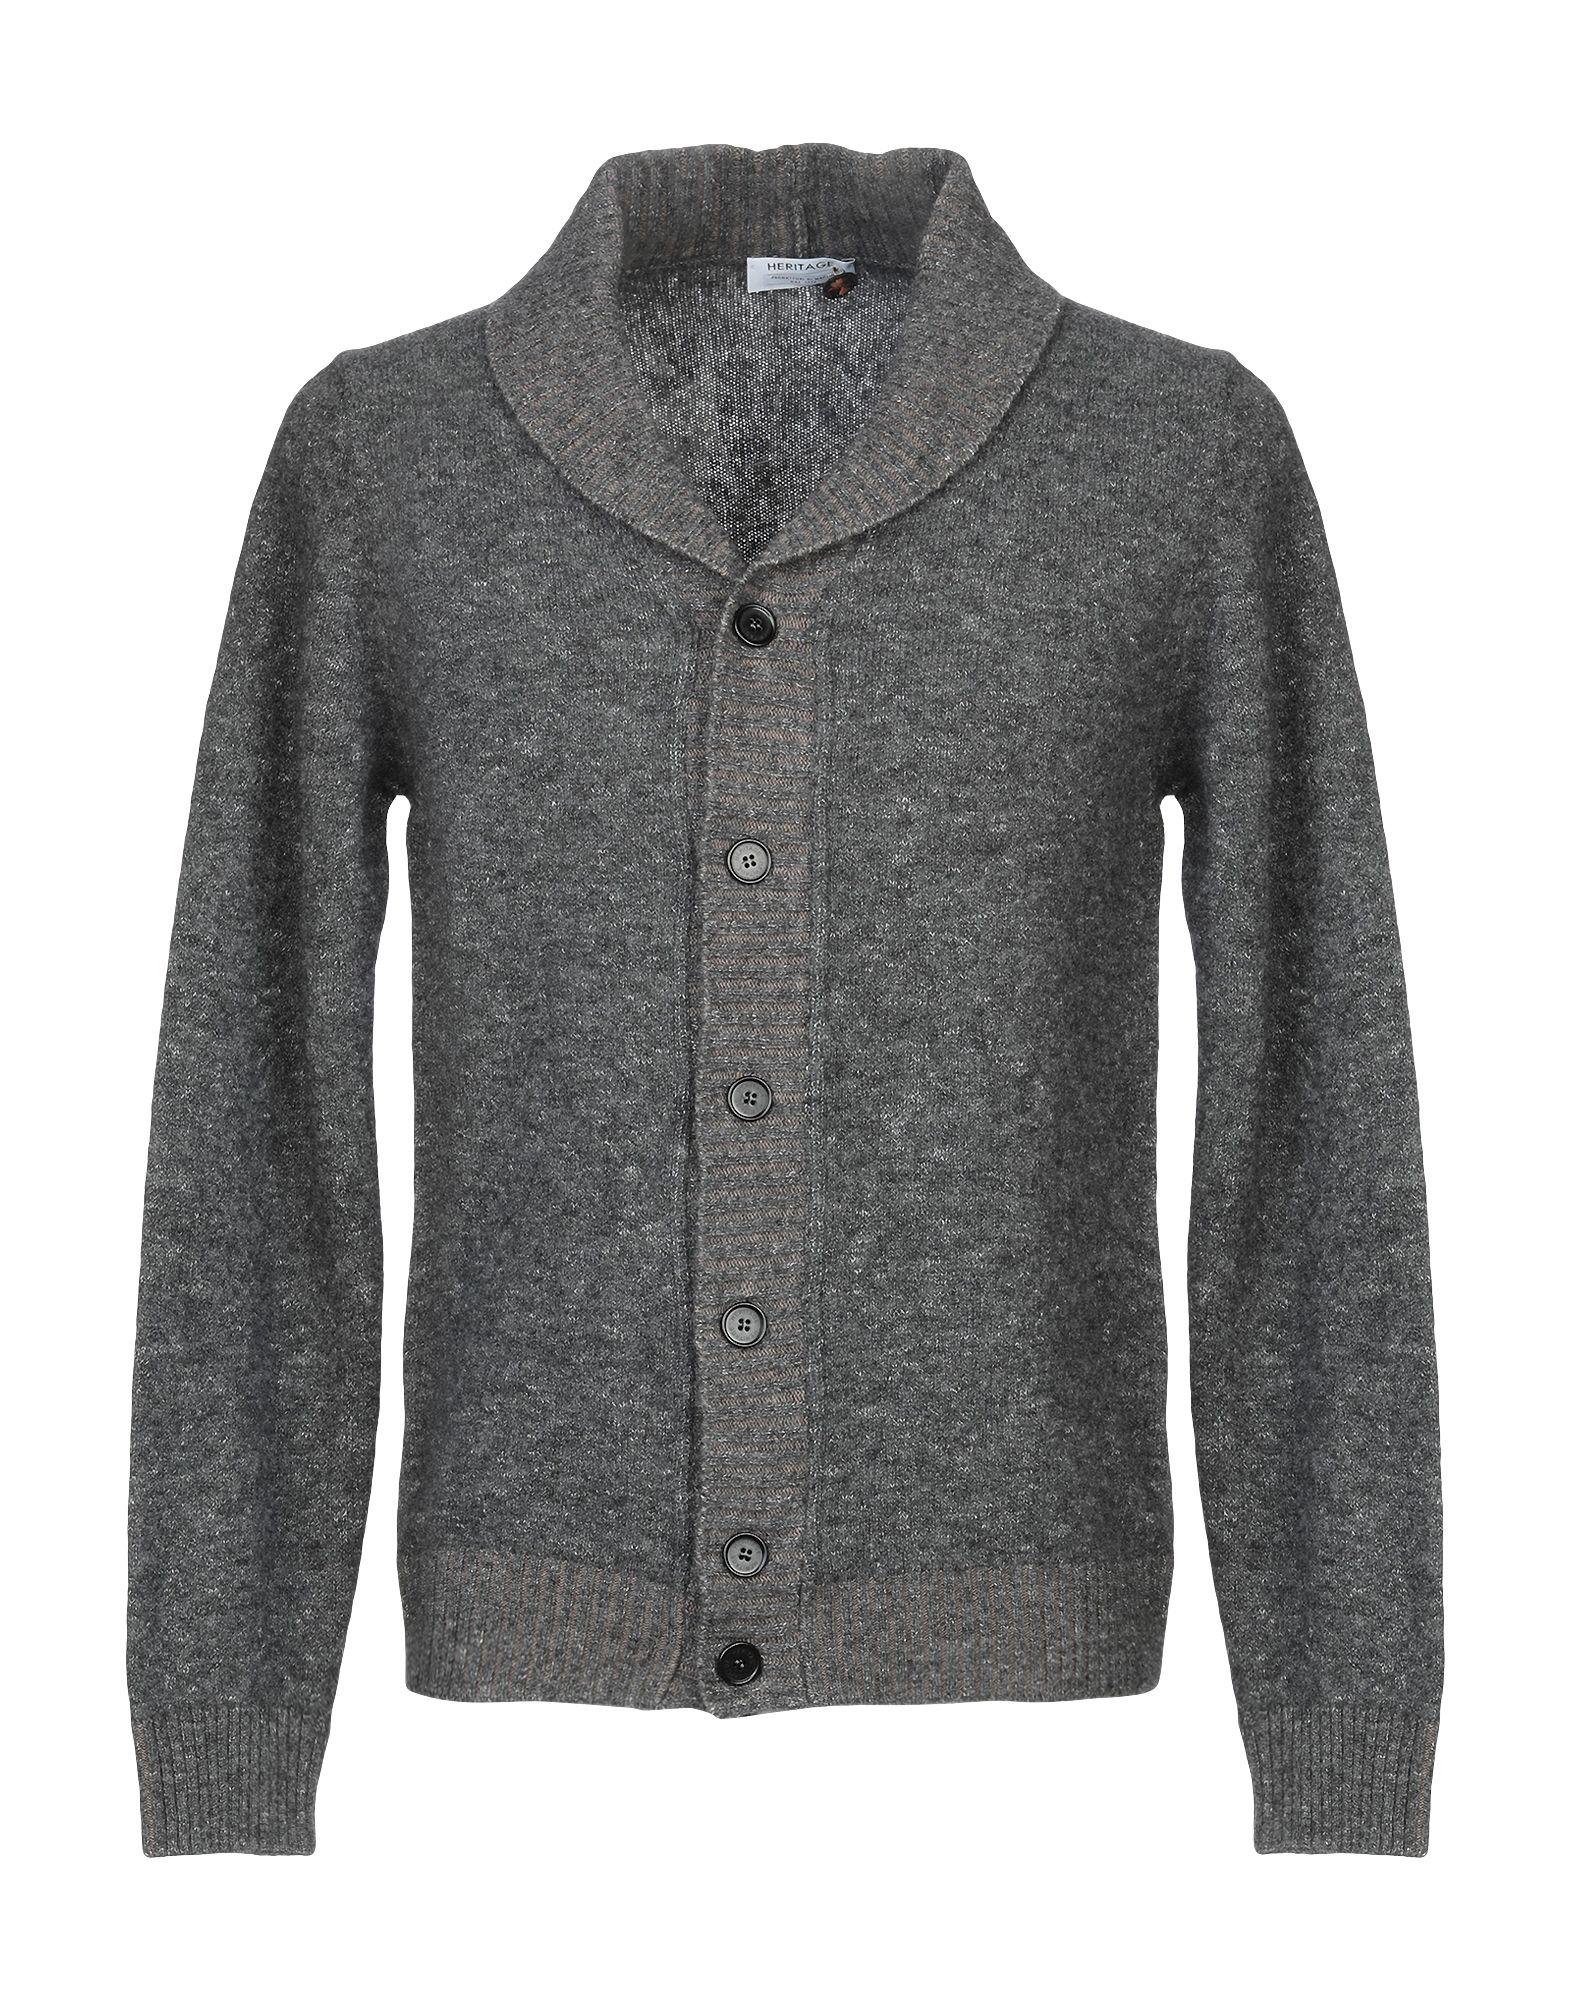 Heritage Wool Cardigan in Grey (Gray) for Men - Lyst